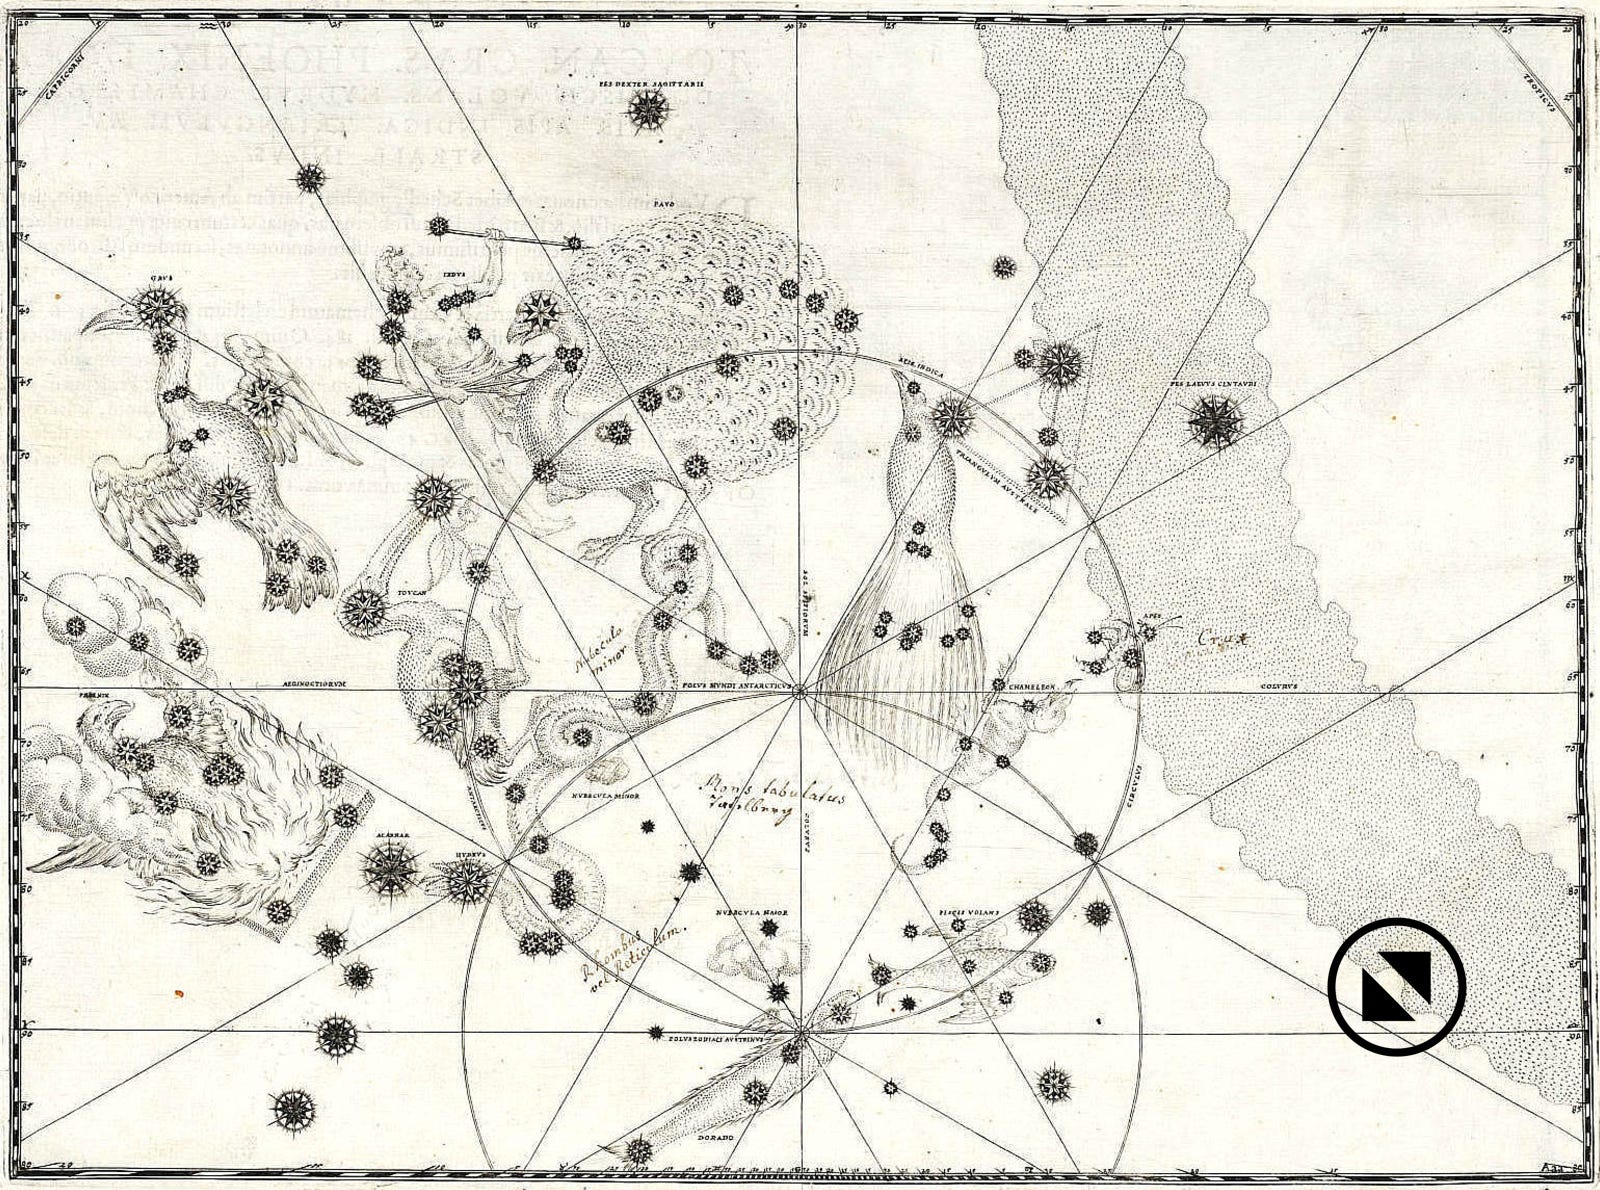 Johann Bayer's southern star chart